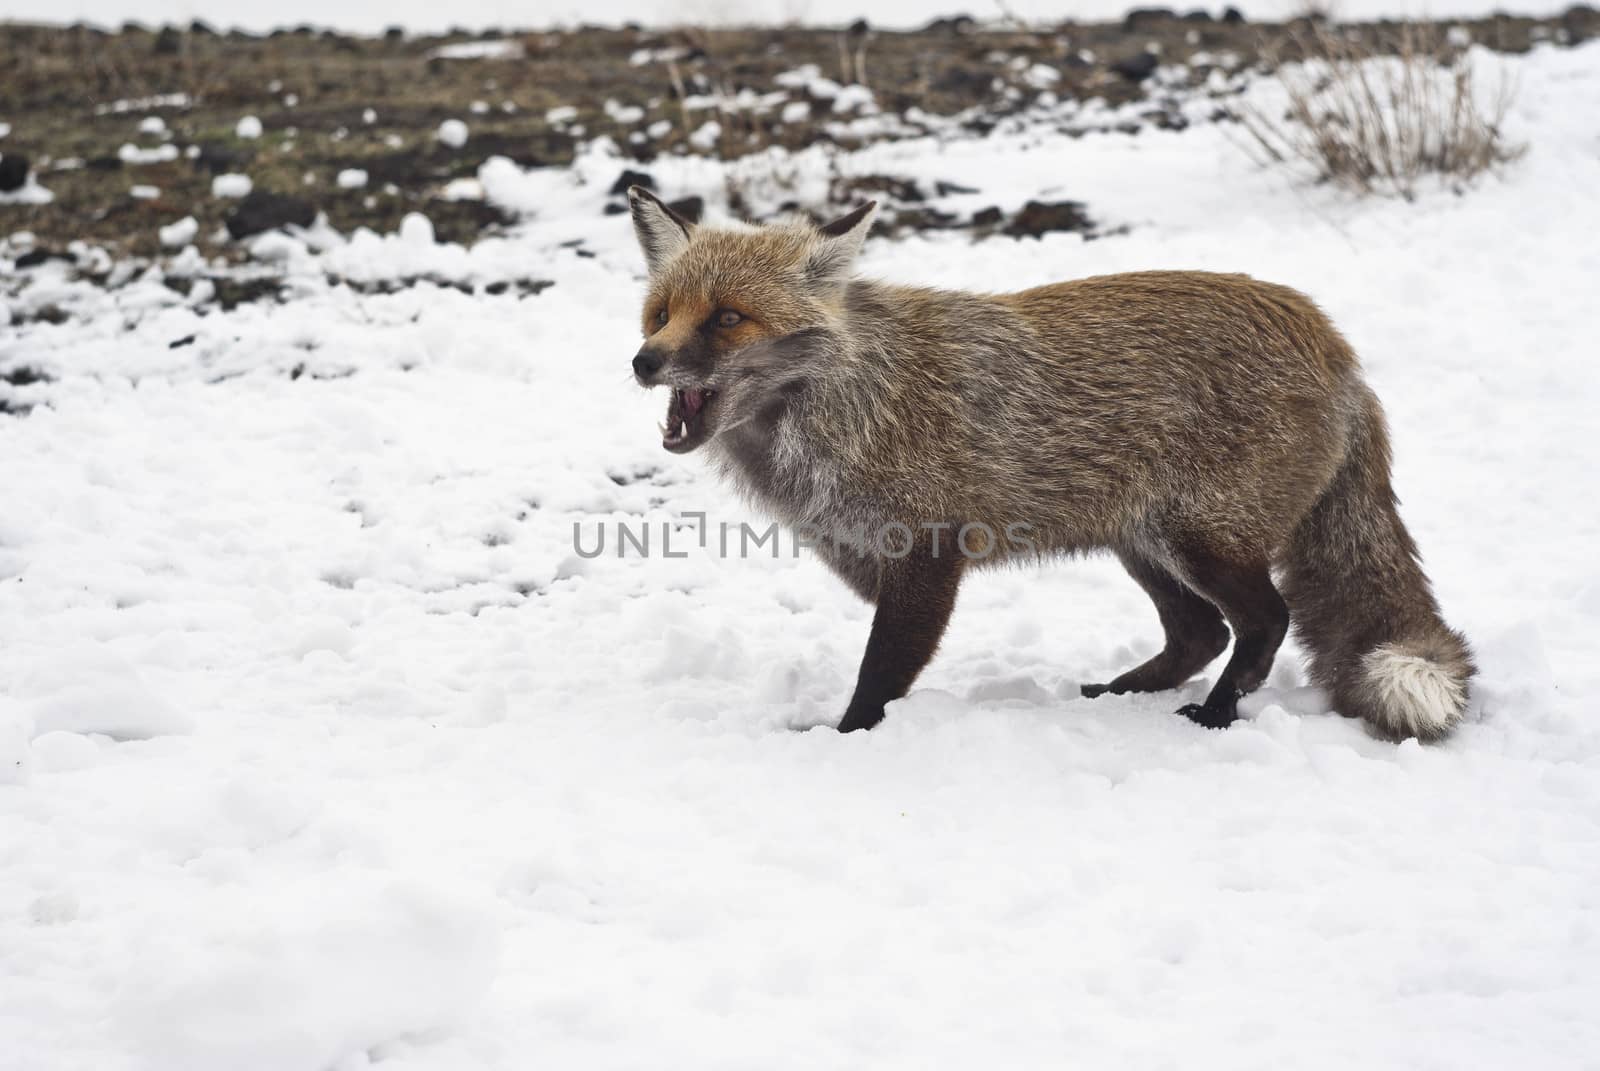 Red fox in the snow by gandolfocannatella